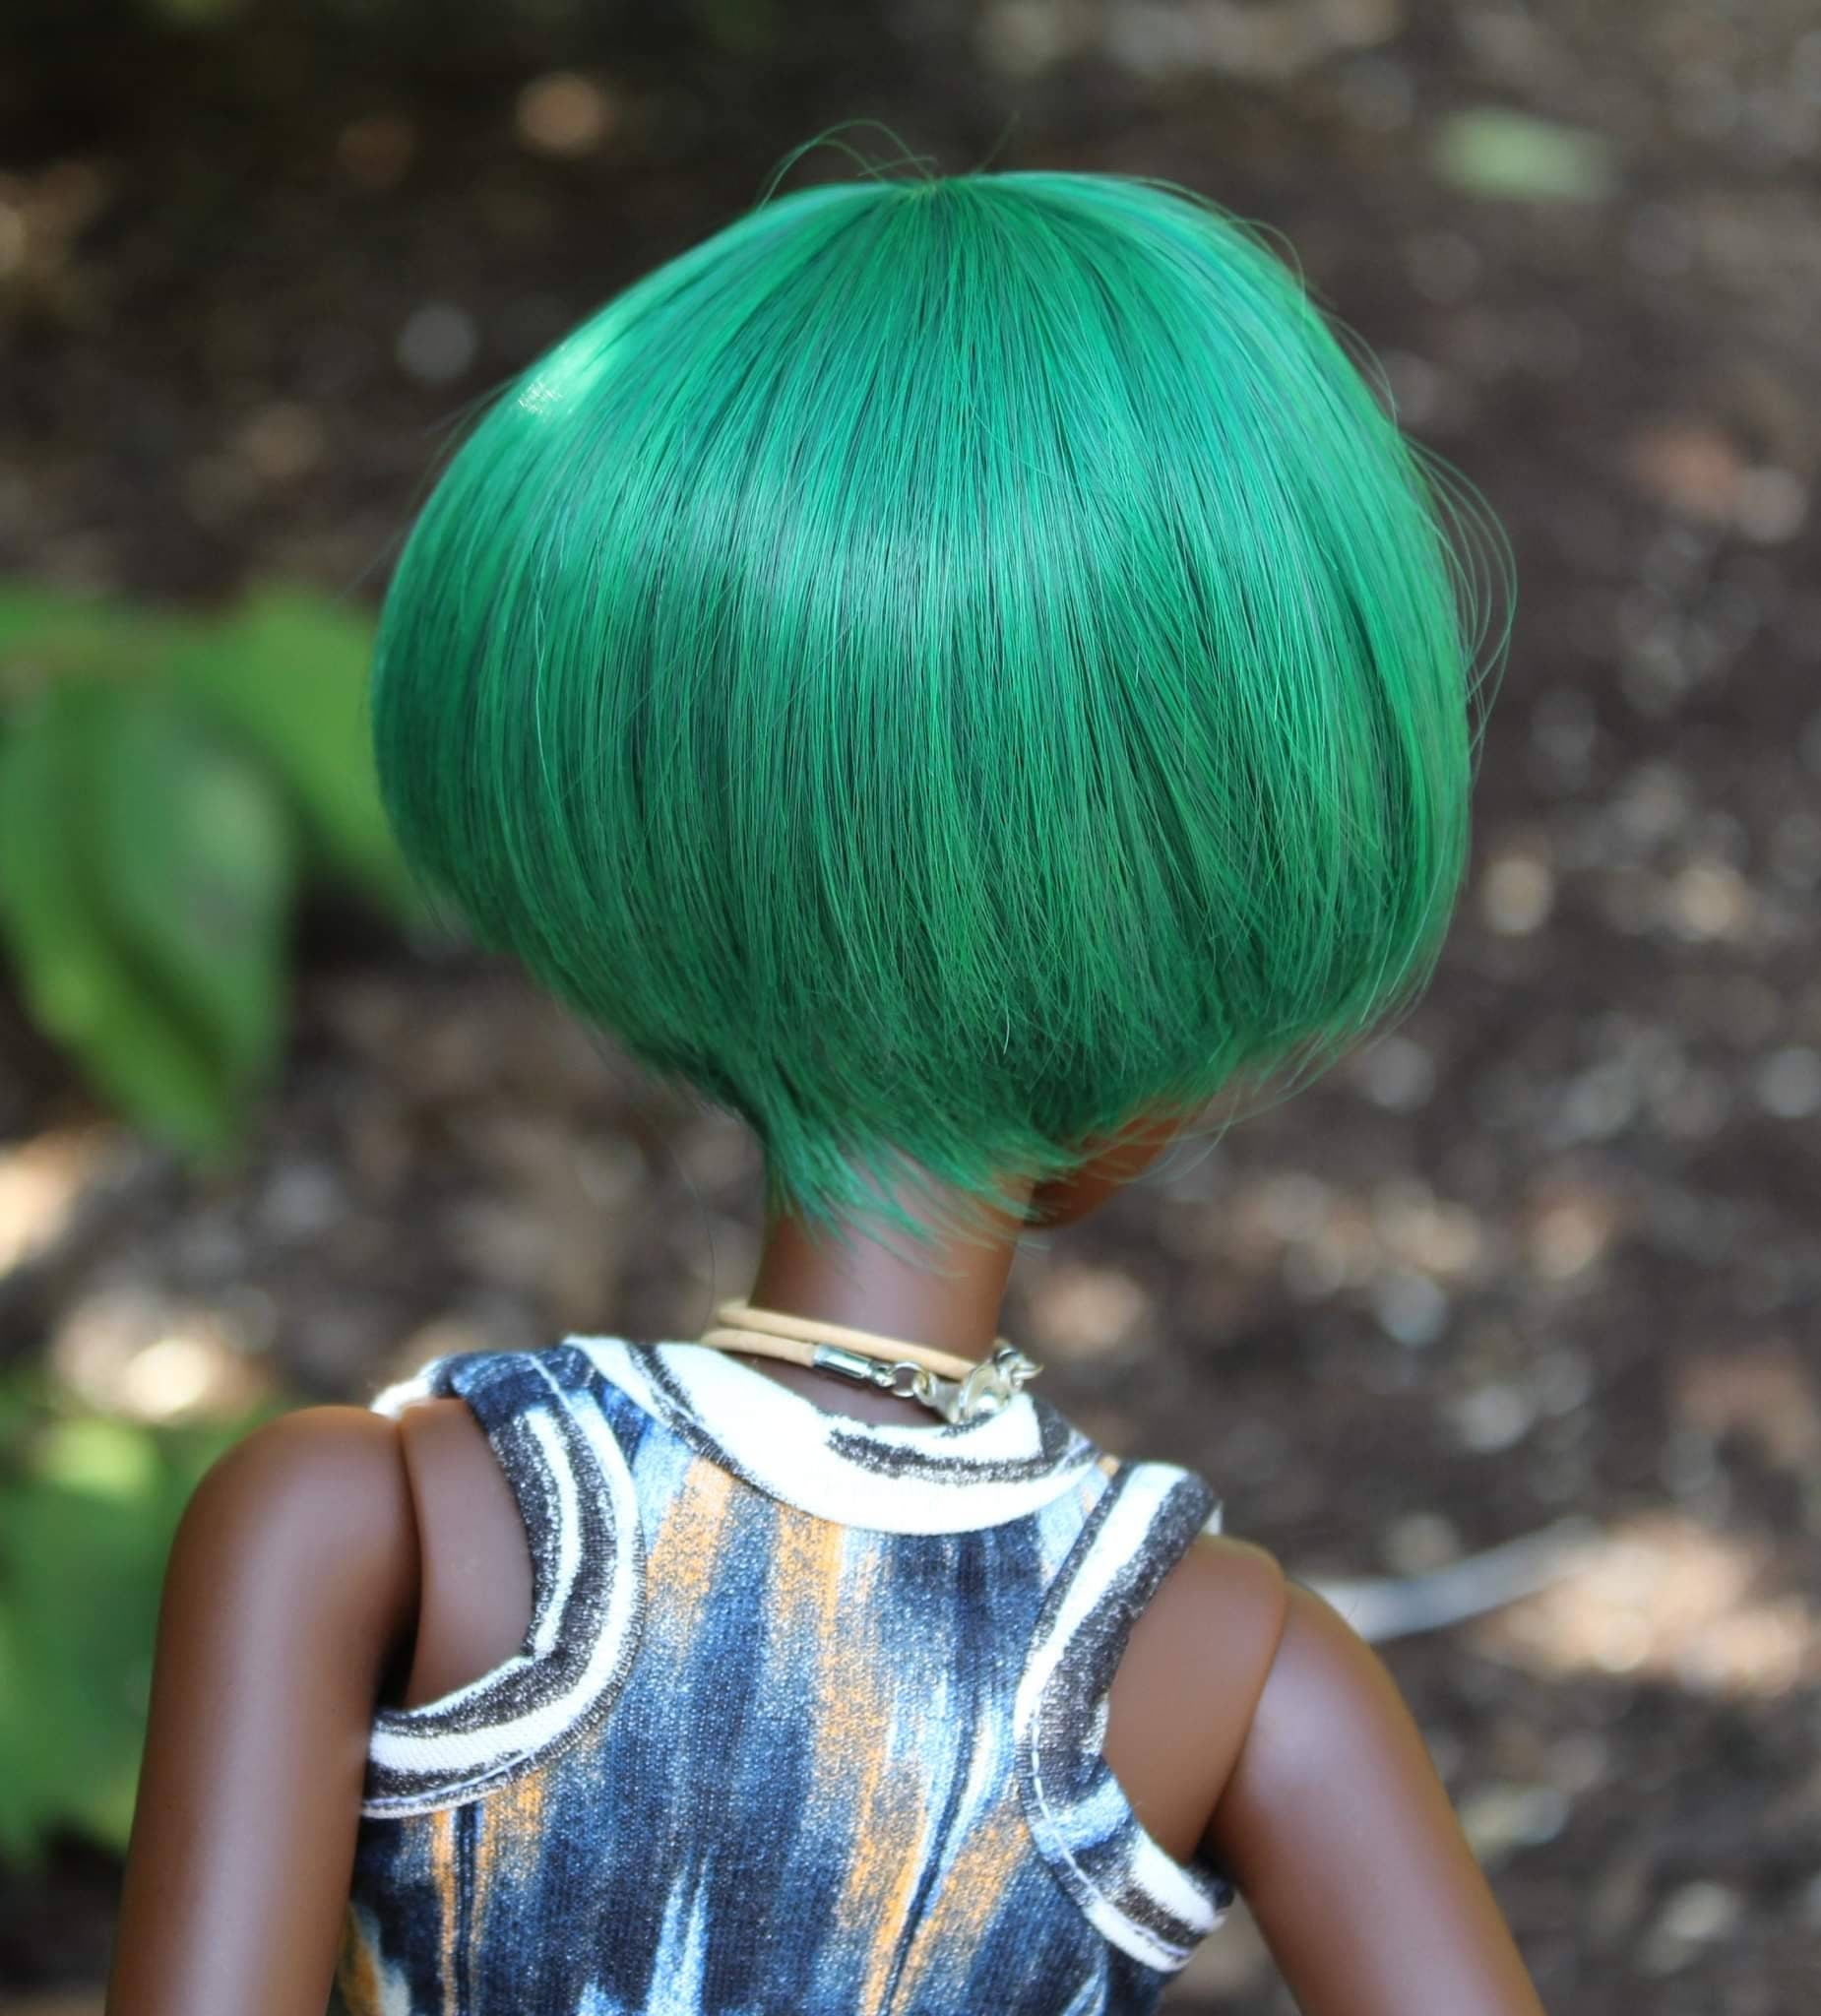 Custom doll WIG for Smart Dolls- Heat Safe - Tangle Resistant- 8.5" head size of Bjd, SD, Dollfie Dream dolls Green pixie